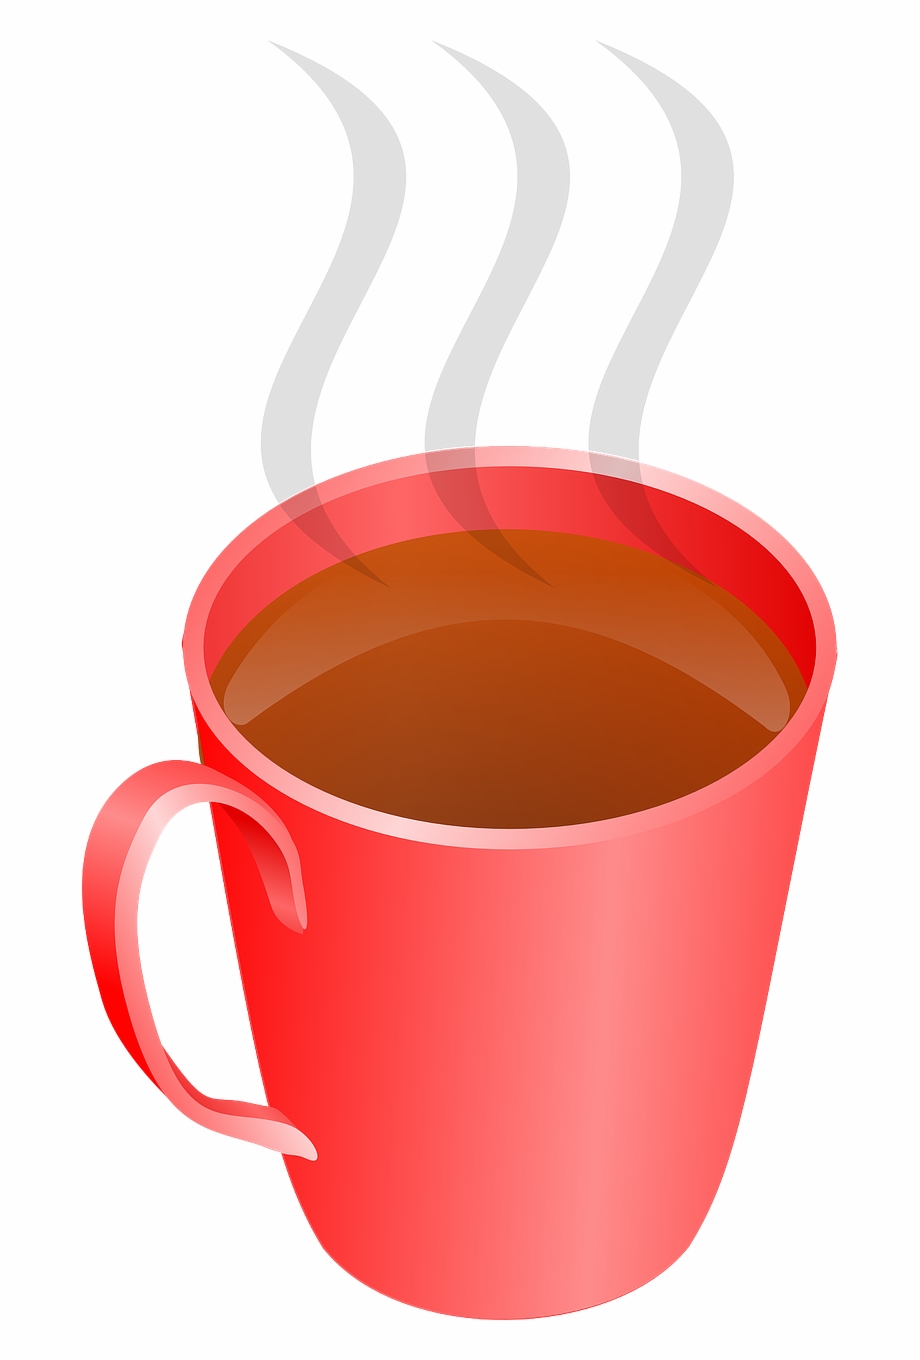 Teacup Coffee Cup Mug Cartoon Cup Of Tea